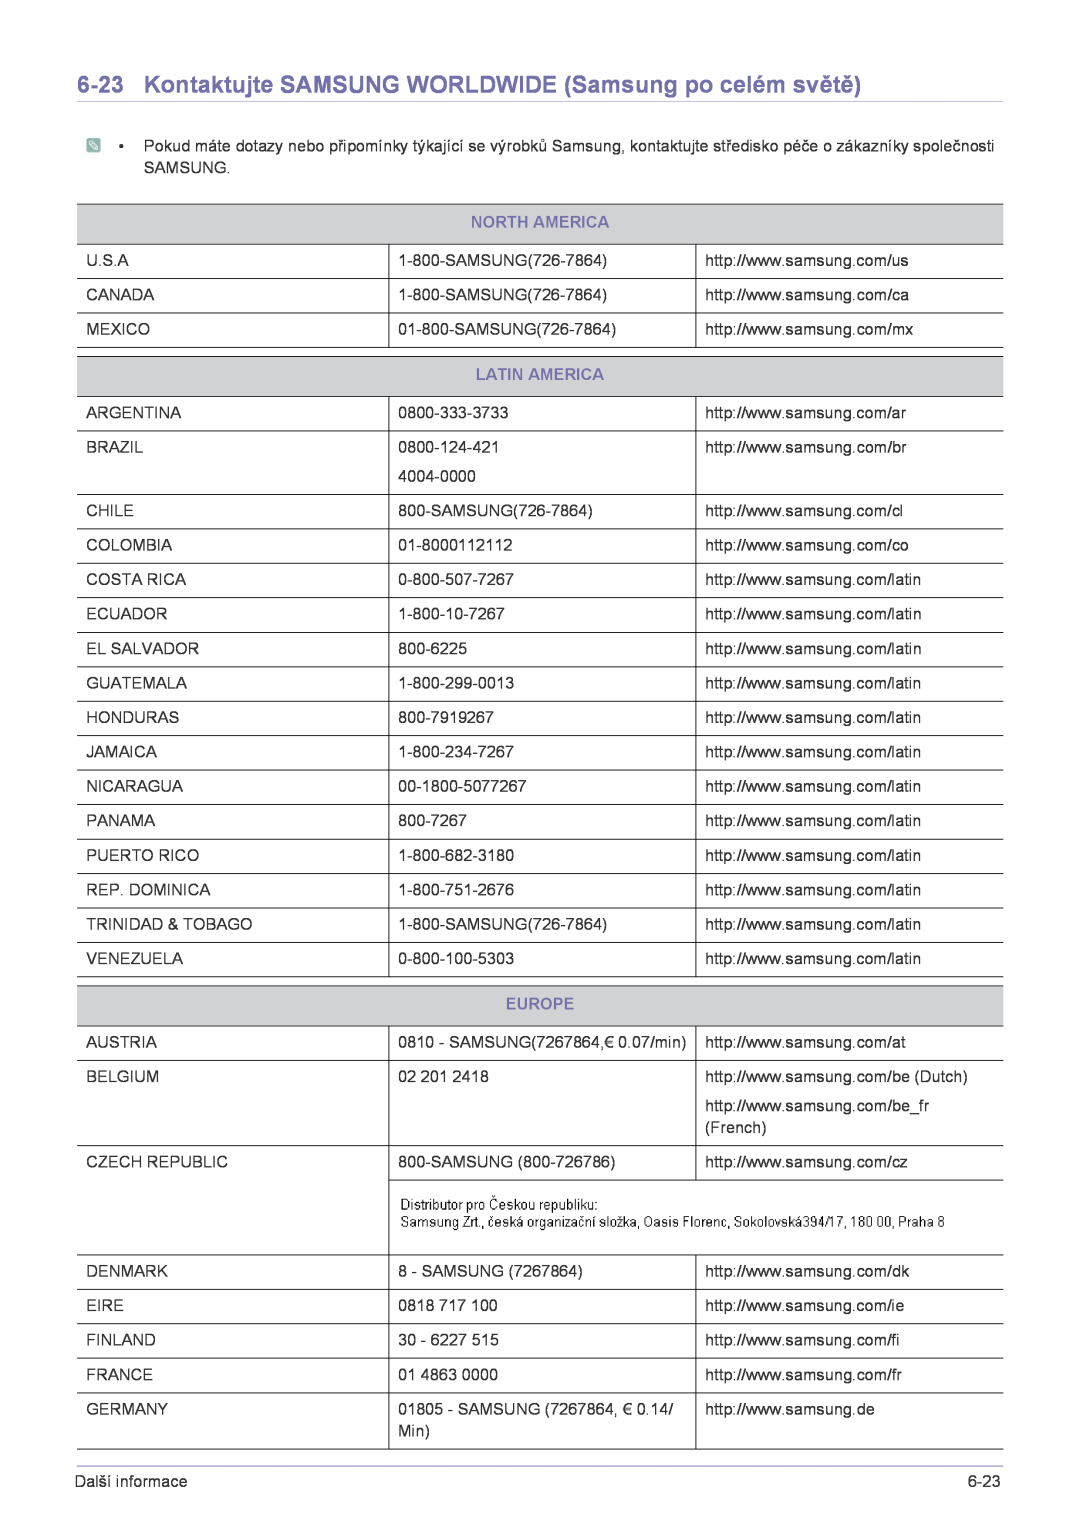 Samsung LS23PUHKFV/ZA manual Kontaktujte SAMSUNG WORLDWIDE Samsung po celém světě, North America, Latin America, Europe 